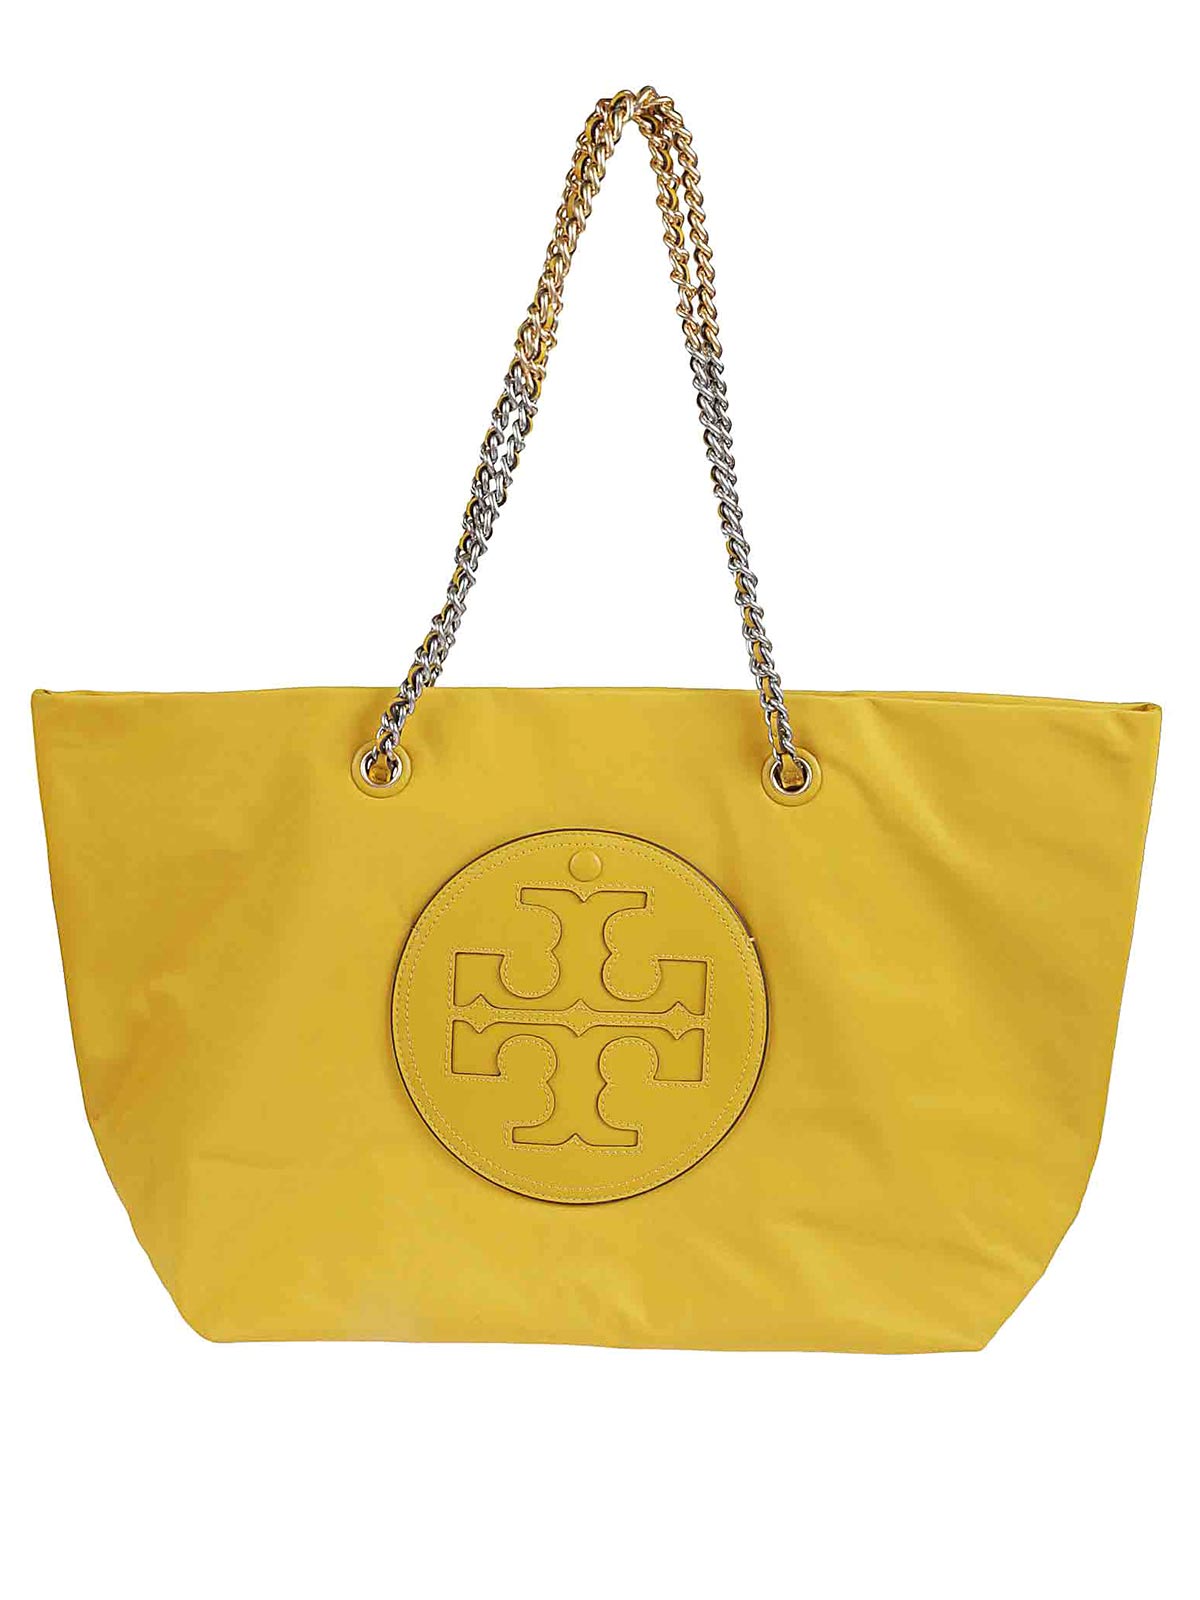 Tory Burch - Women's Ella Chain Tote Bag - Yellow